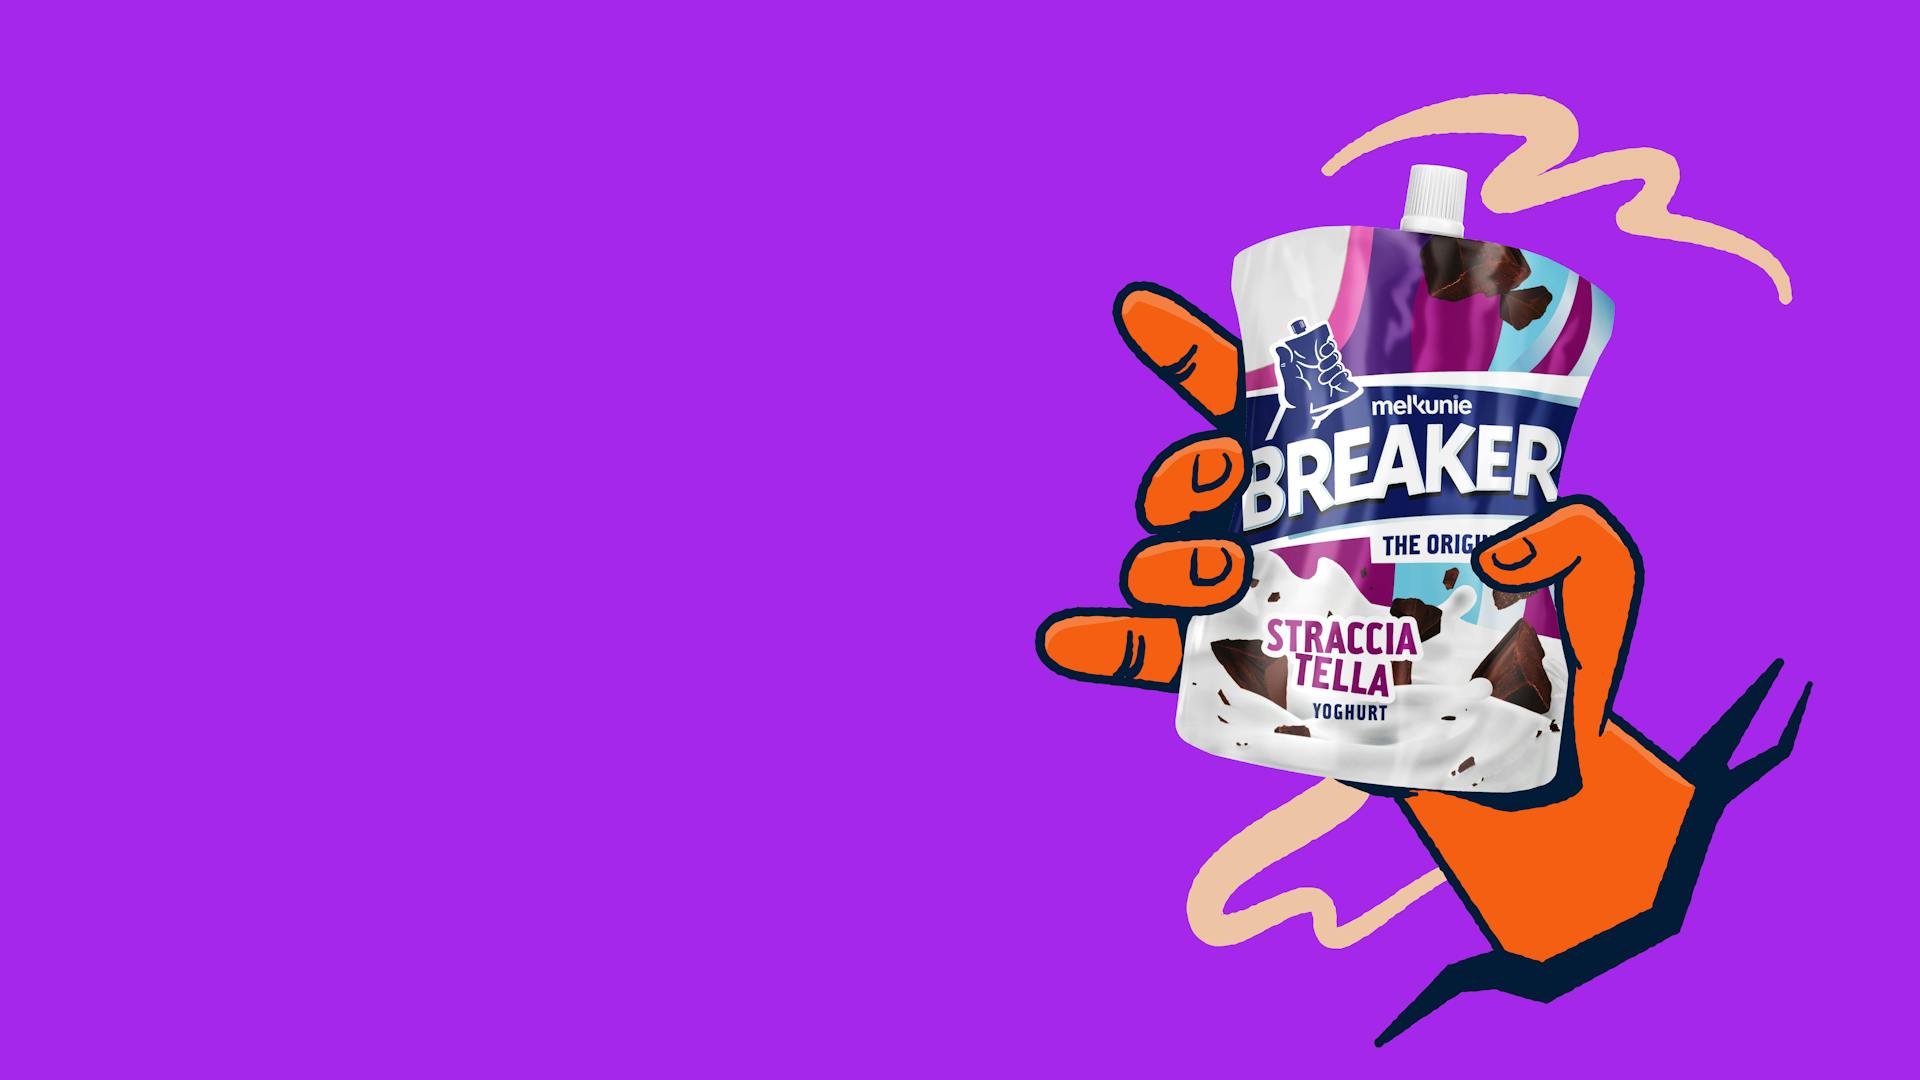 Melkunie Breaker stracciatella in handje met paarse achtergrond.